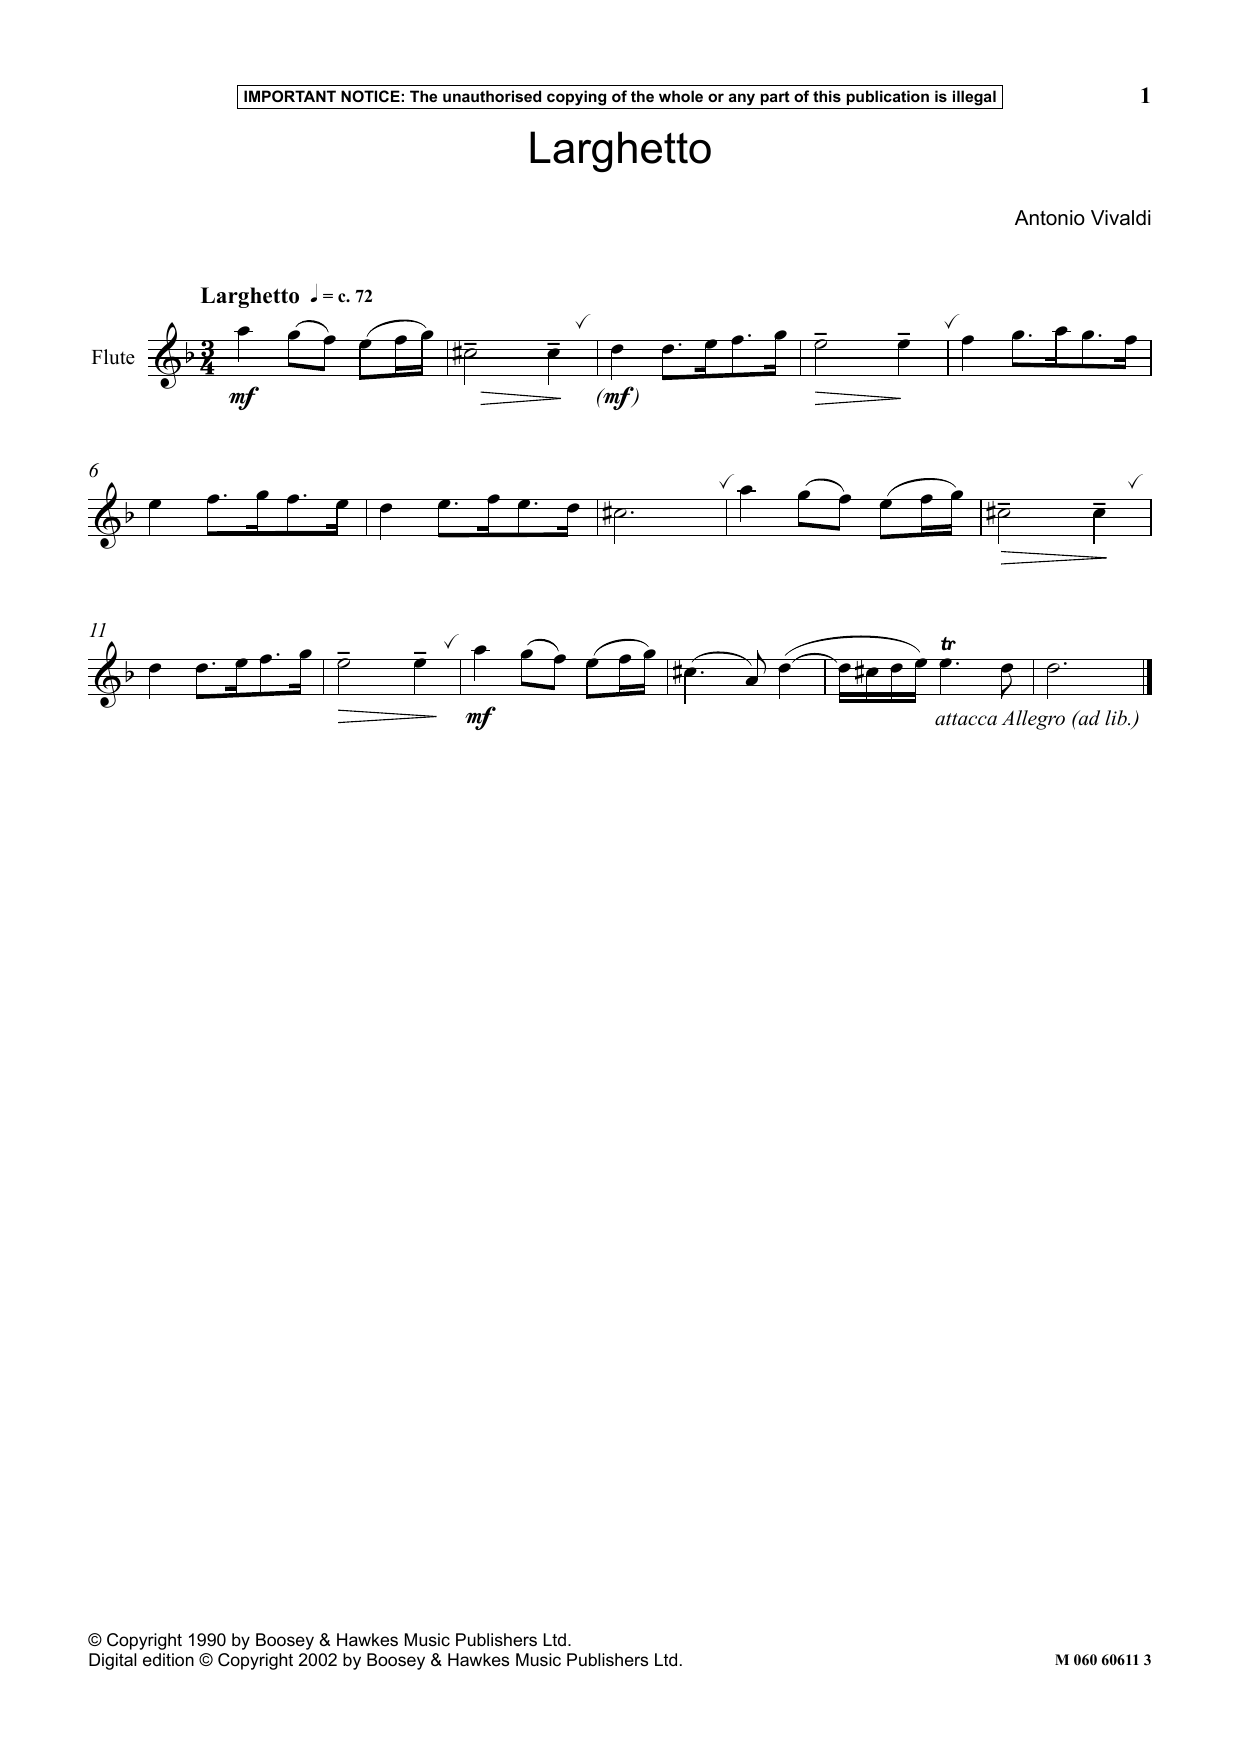 Antonio Vivaldi Larghetto Sheet Music Notes & Chords for Solo Guitar - Download or Print PDF